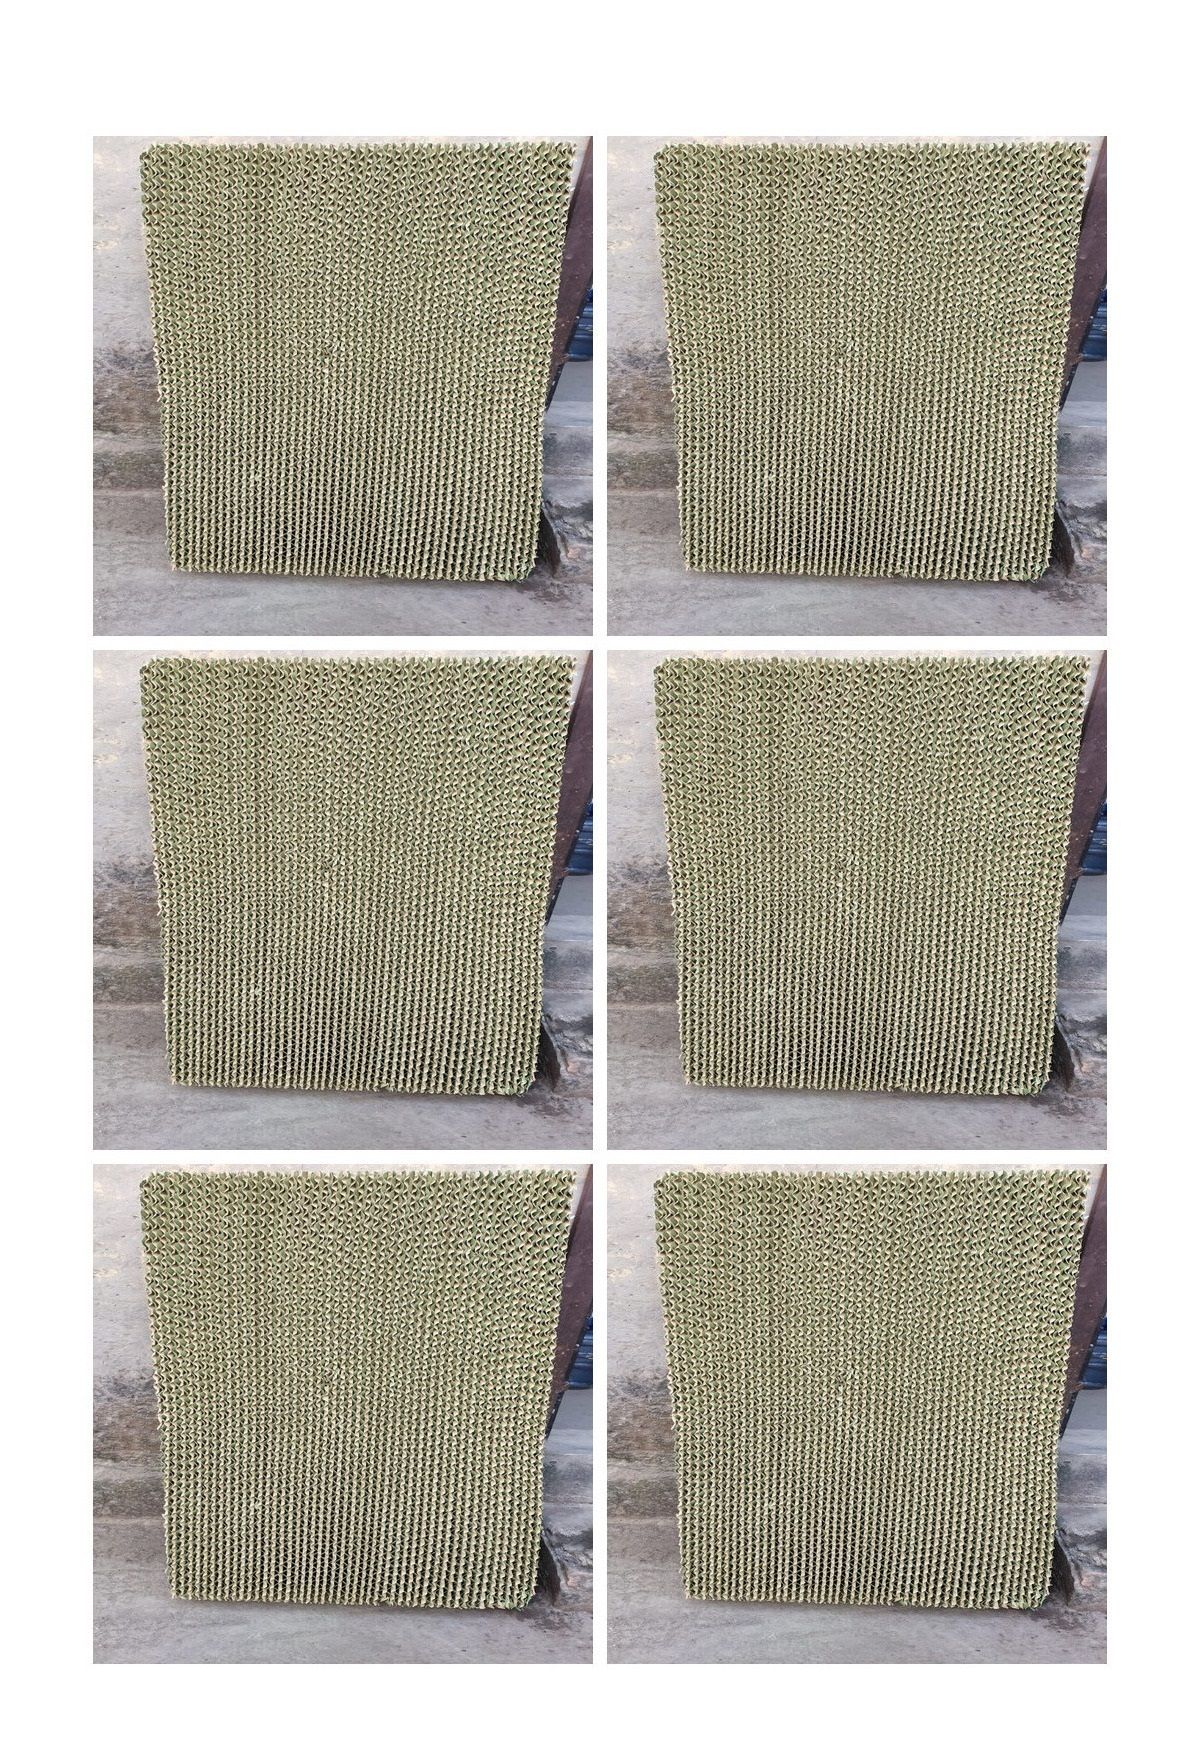 Evaporative Cooling Pad Manufacturer In Jhajjar Haryana